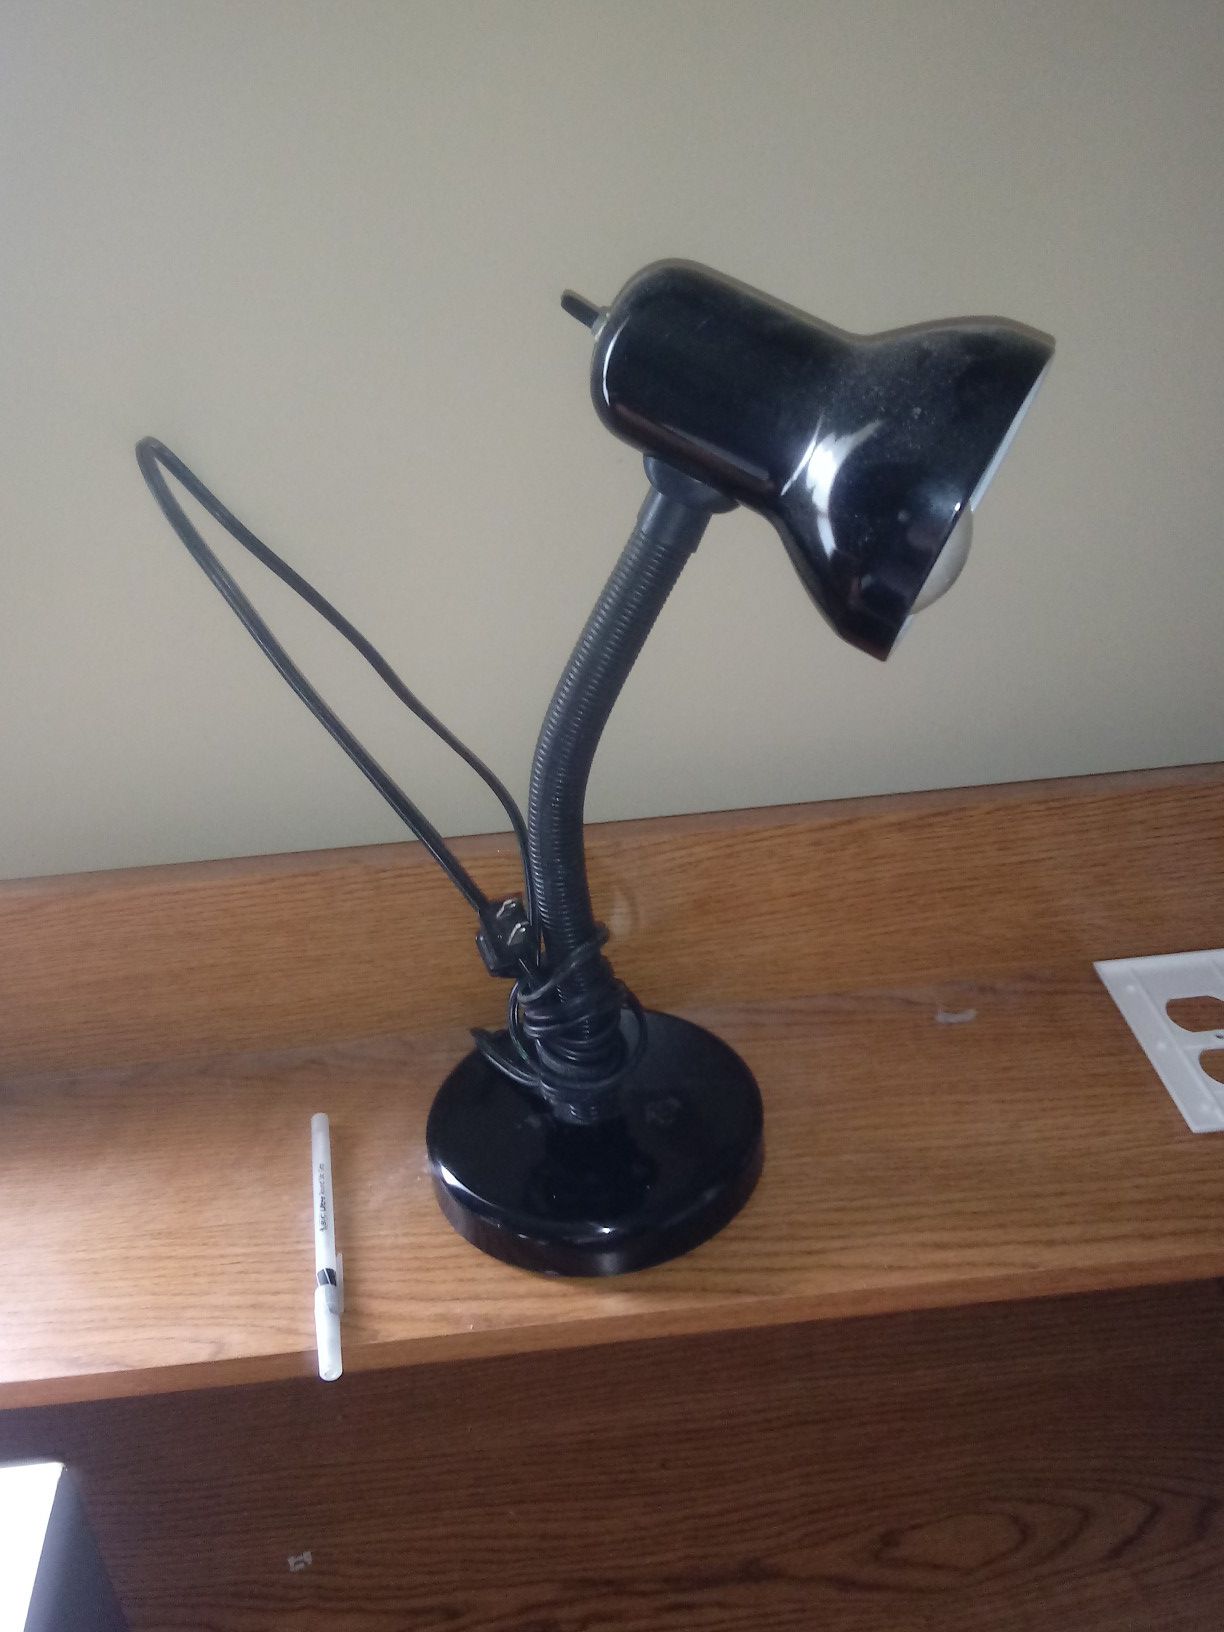 $8 desktop lamp with bulb